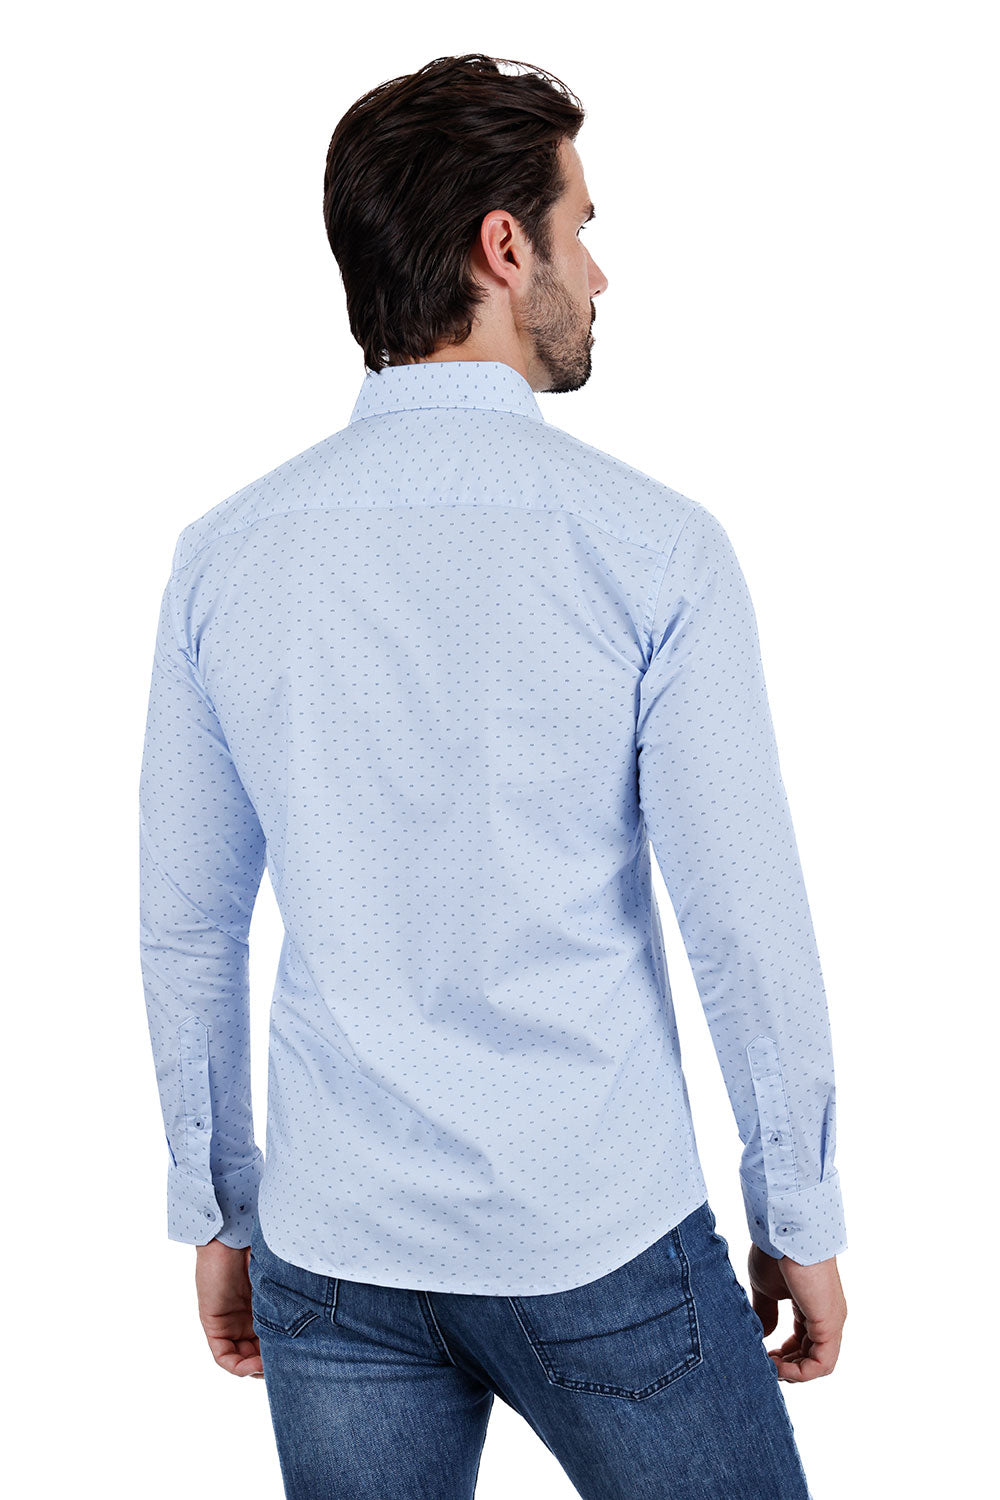 BARABAS Men's Solid Color Polka Dot Print Long Sleeve Shirts 3B358 Blue